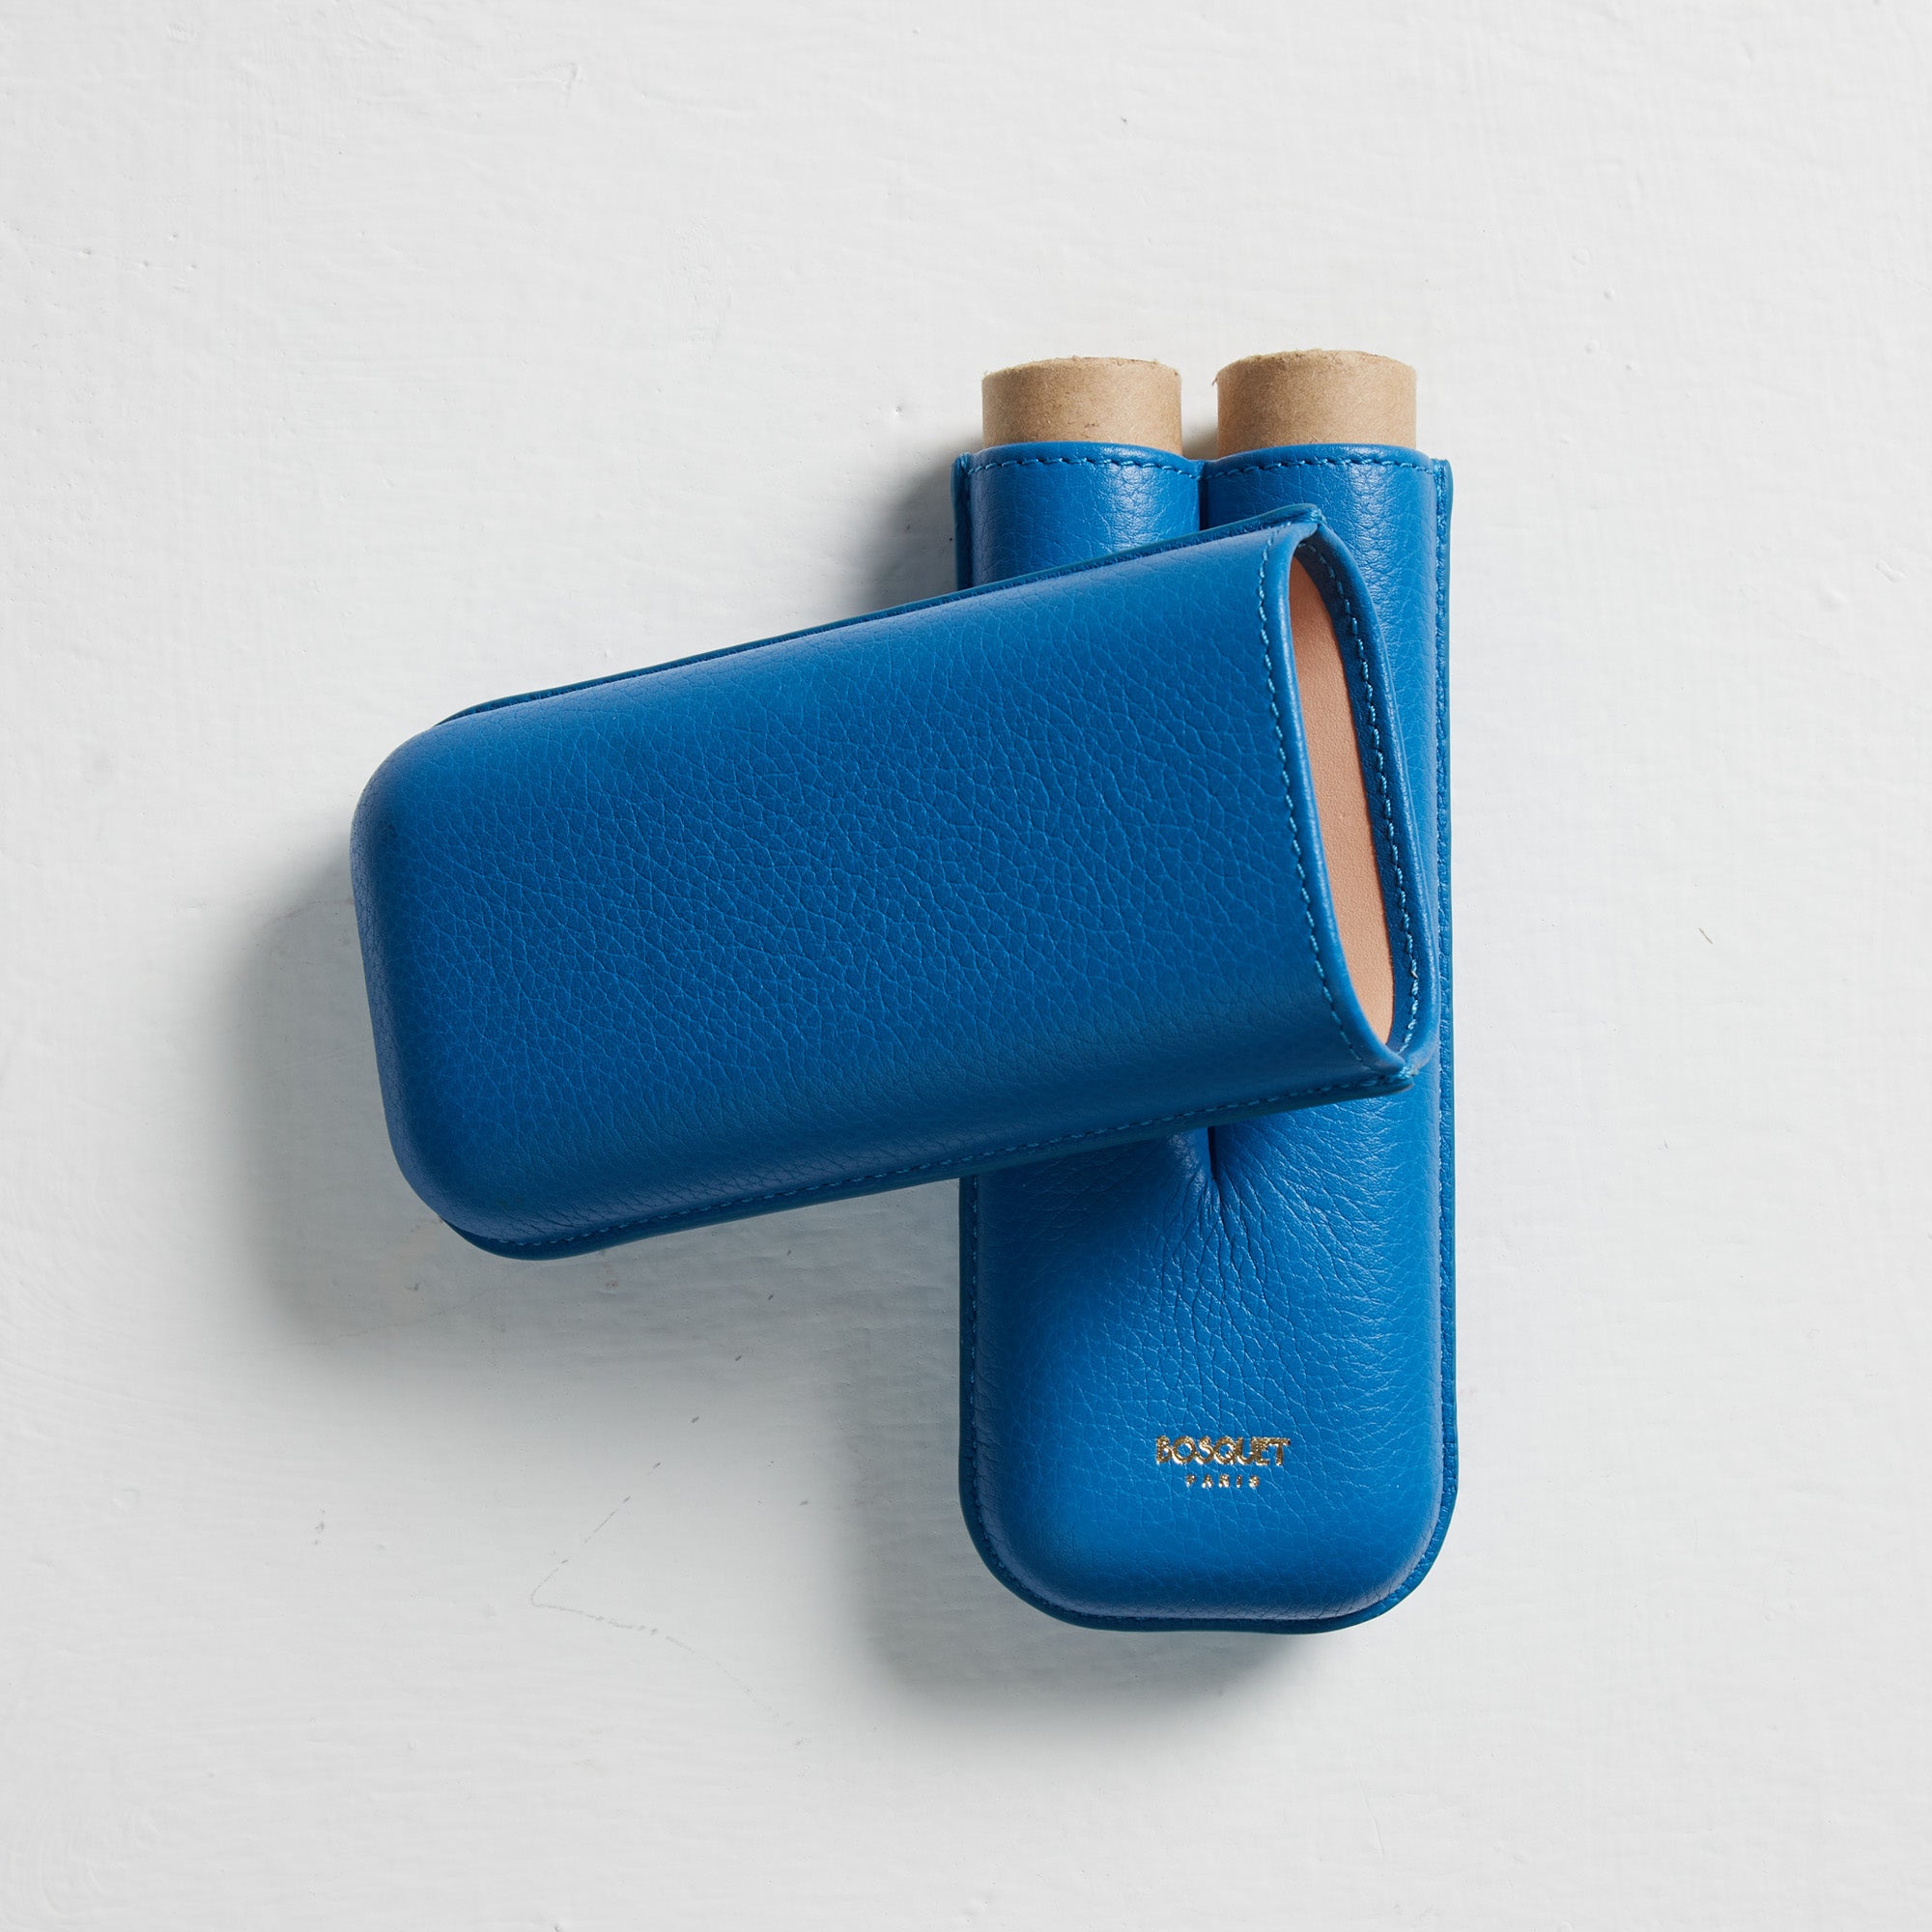 Bosquet Smooth Capri Blue Leather Cigar Case